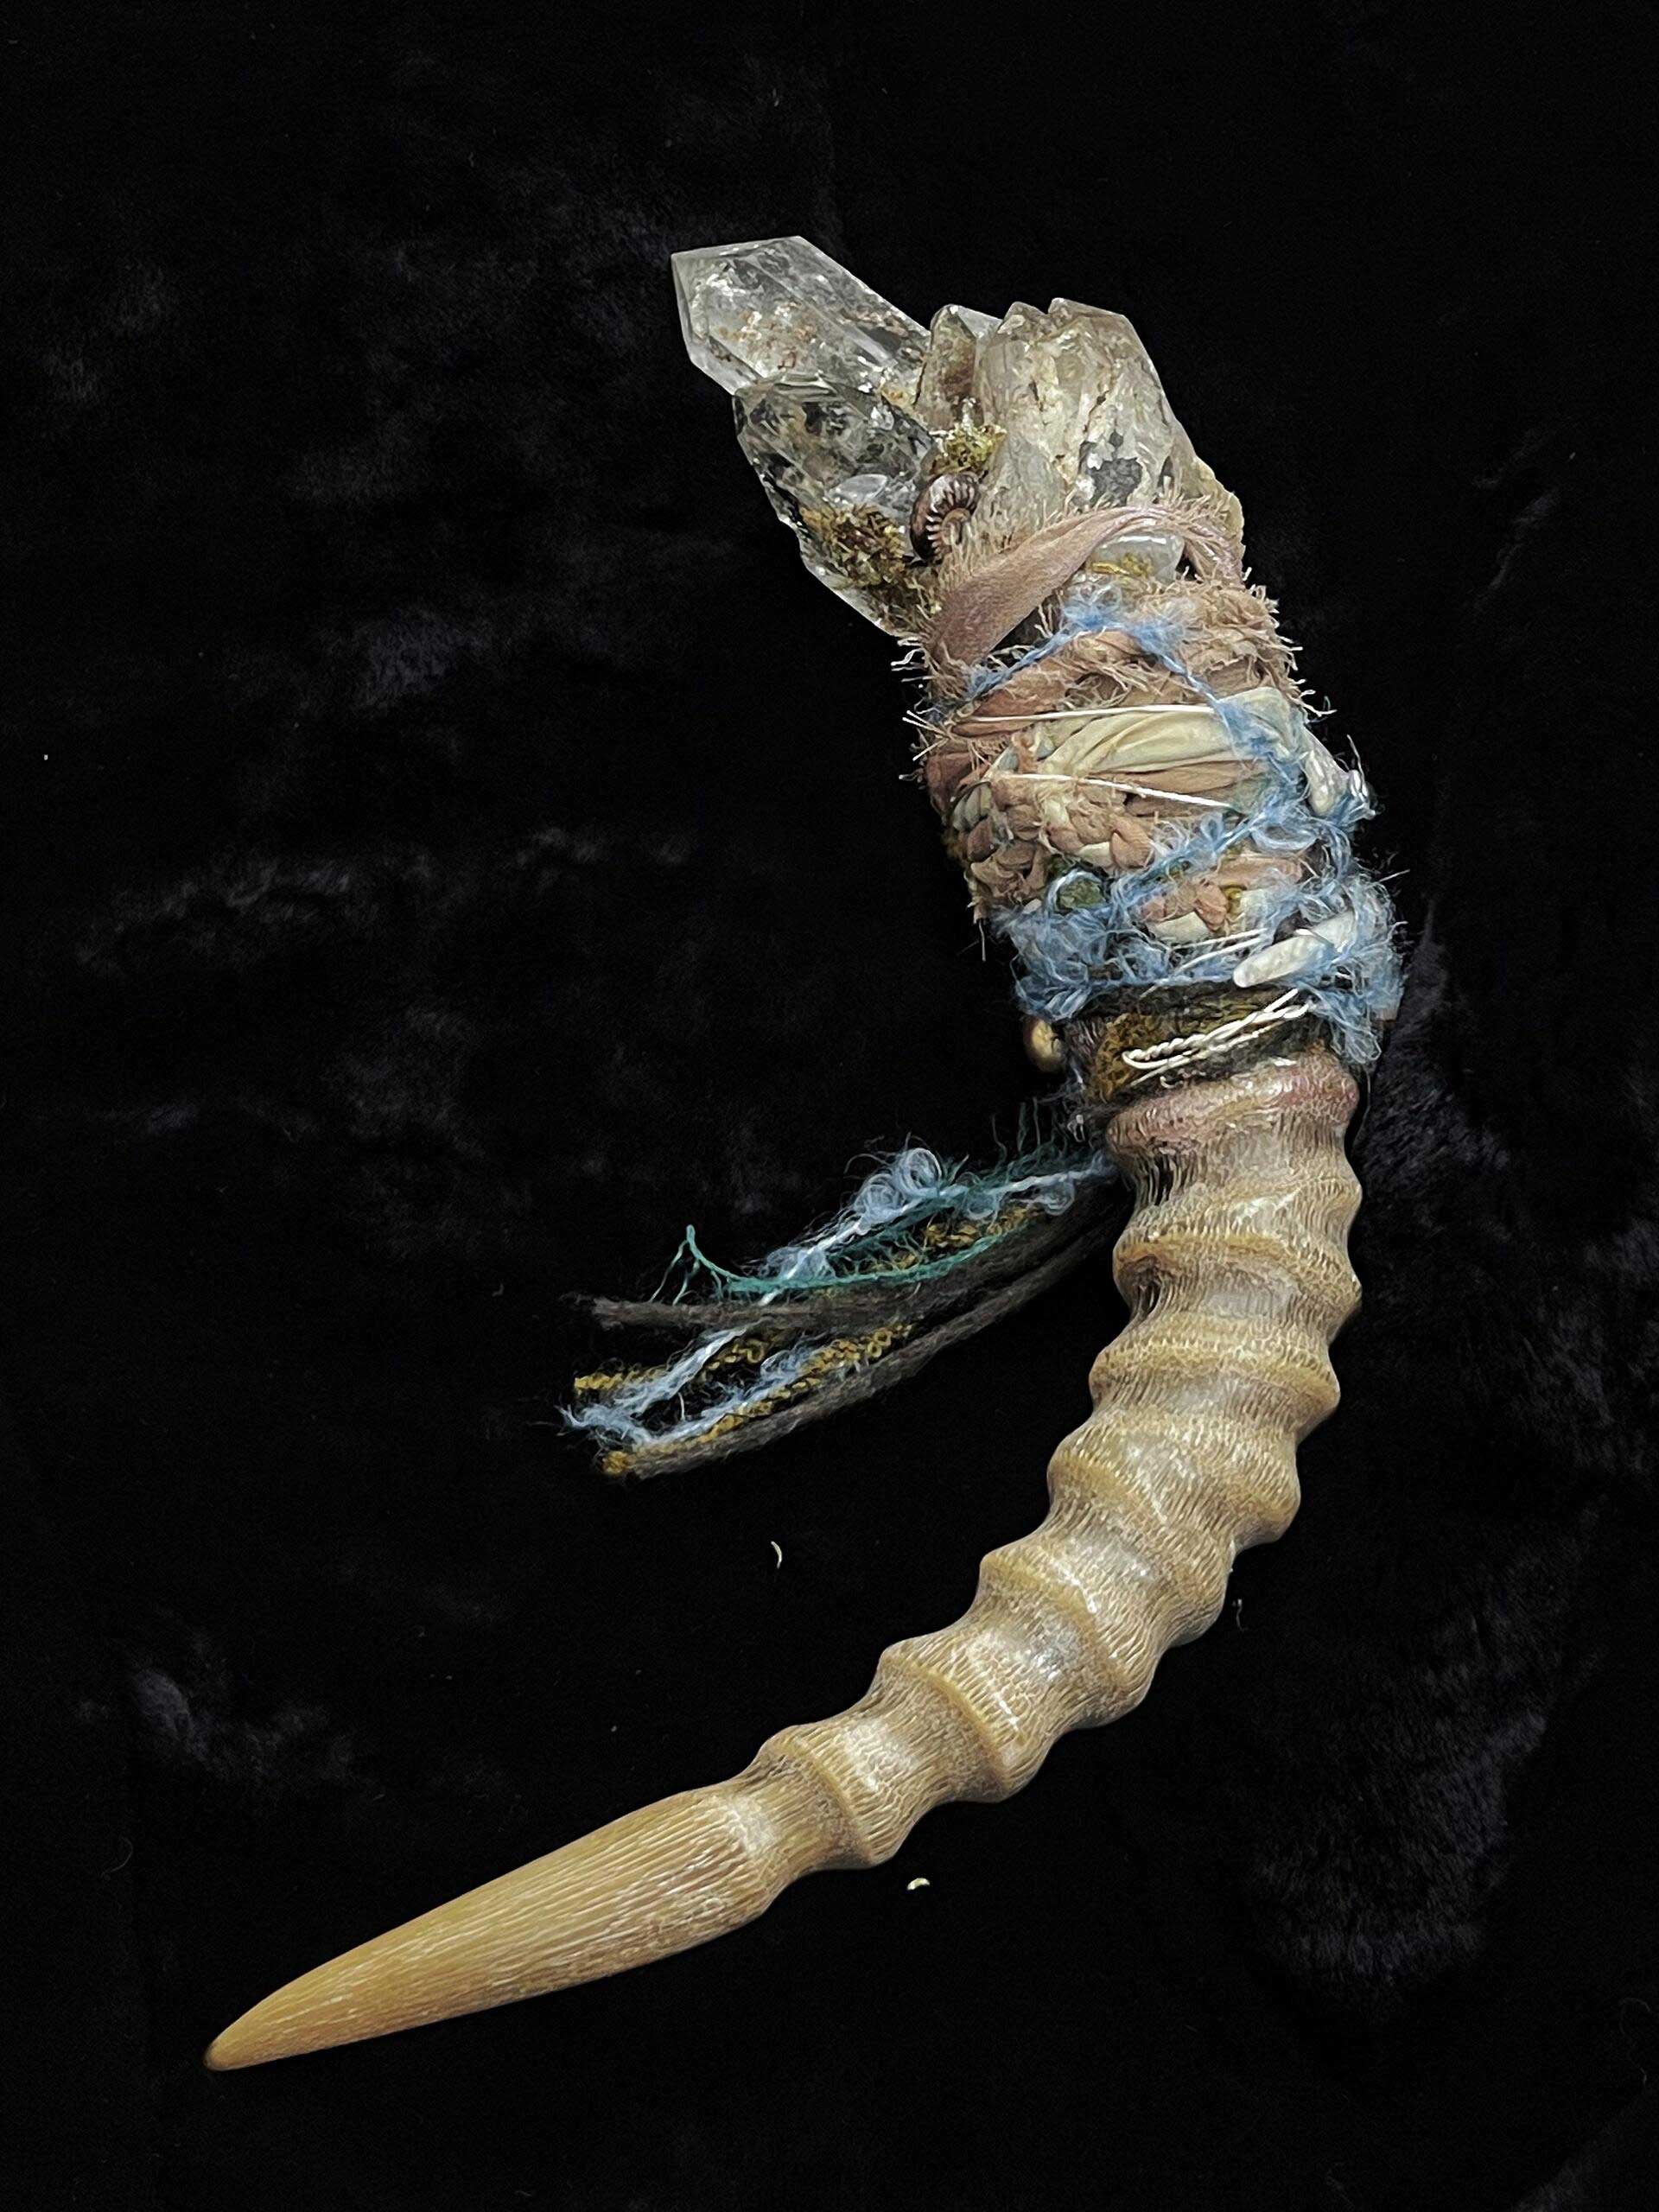 Nature God Magic Scepter Tibetan Quartz Crystal Imitation Tibetan Antelope Horns Handmade